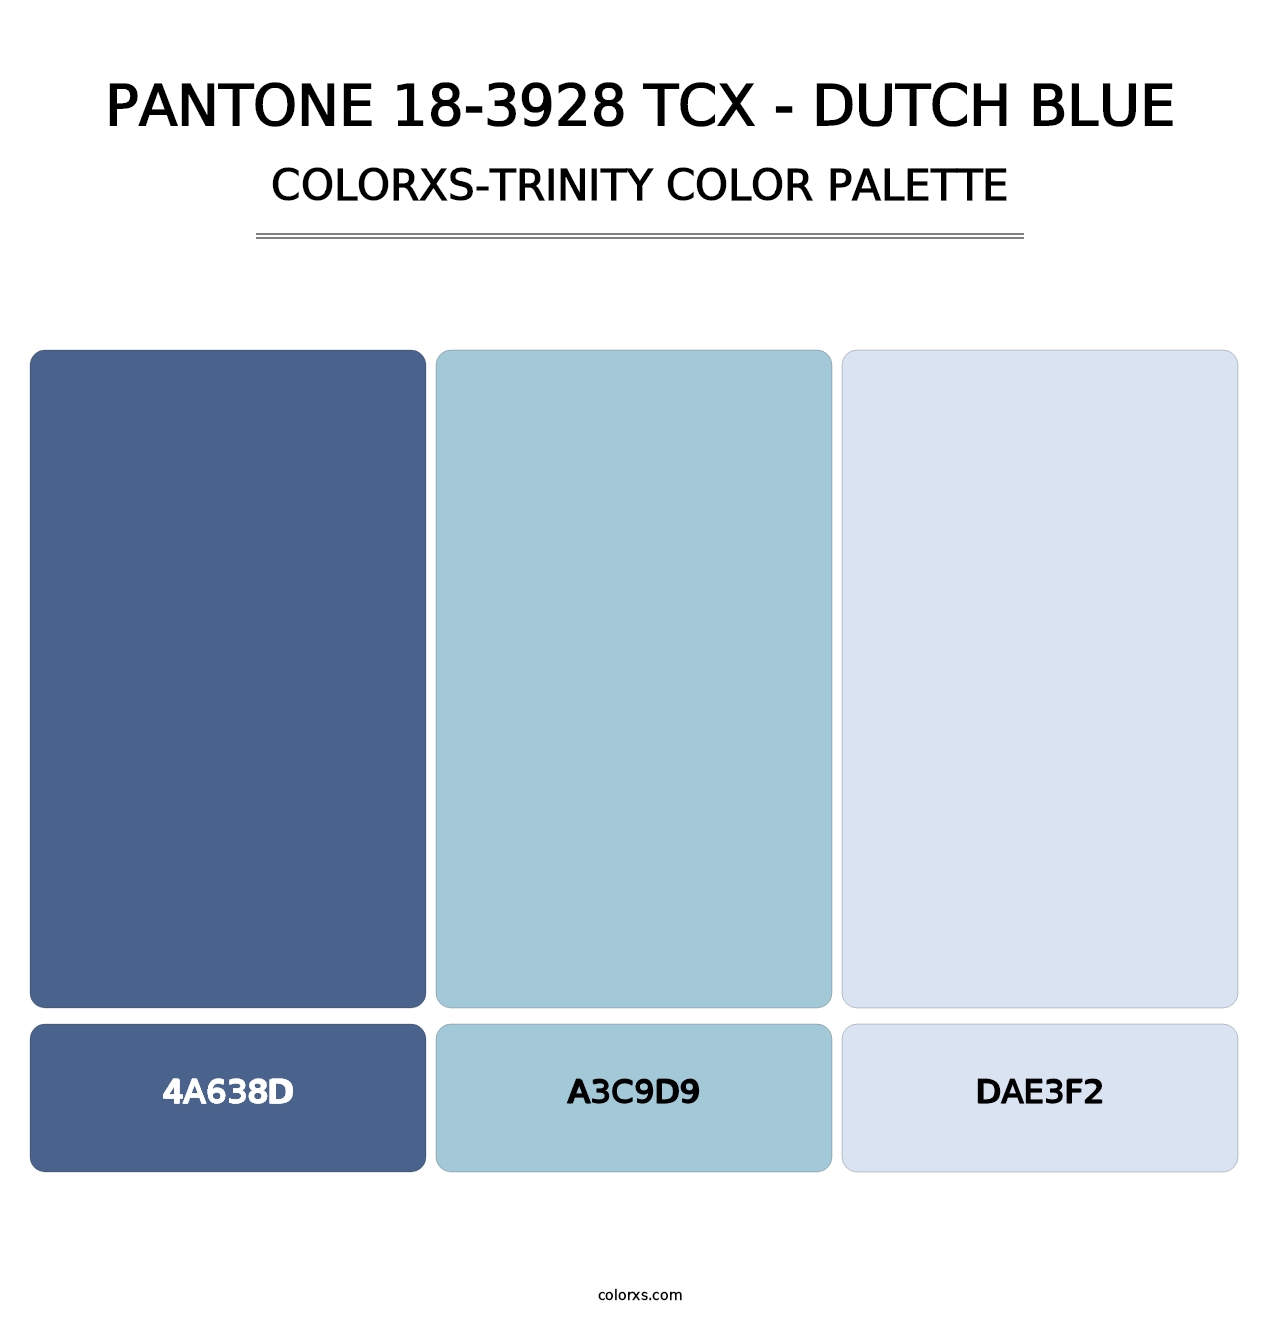 PANTONE 18-3928 TCX - Dutch Blue - Colorxs Trinity Palette